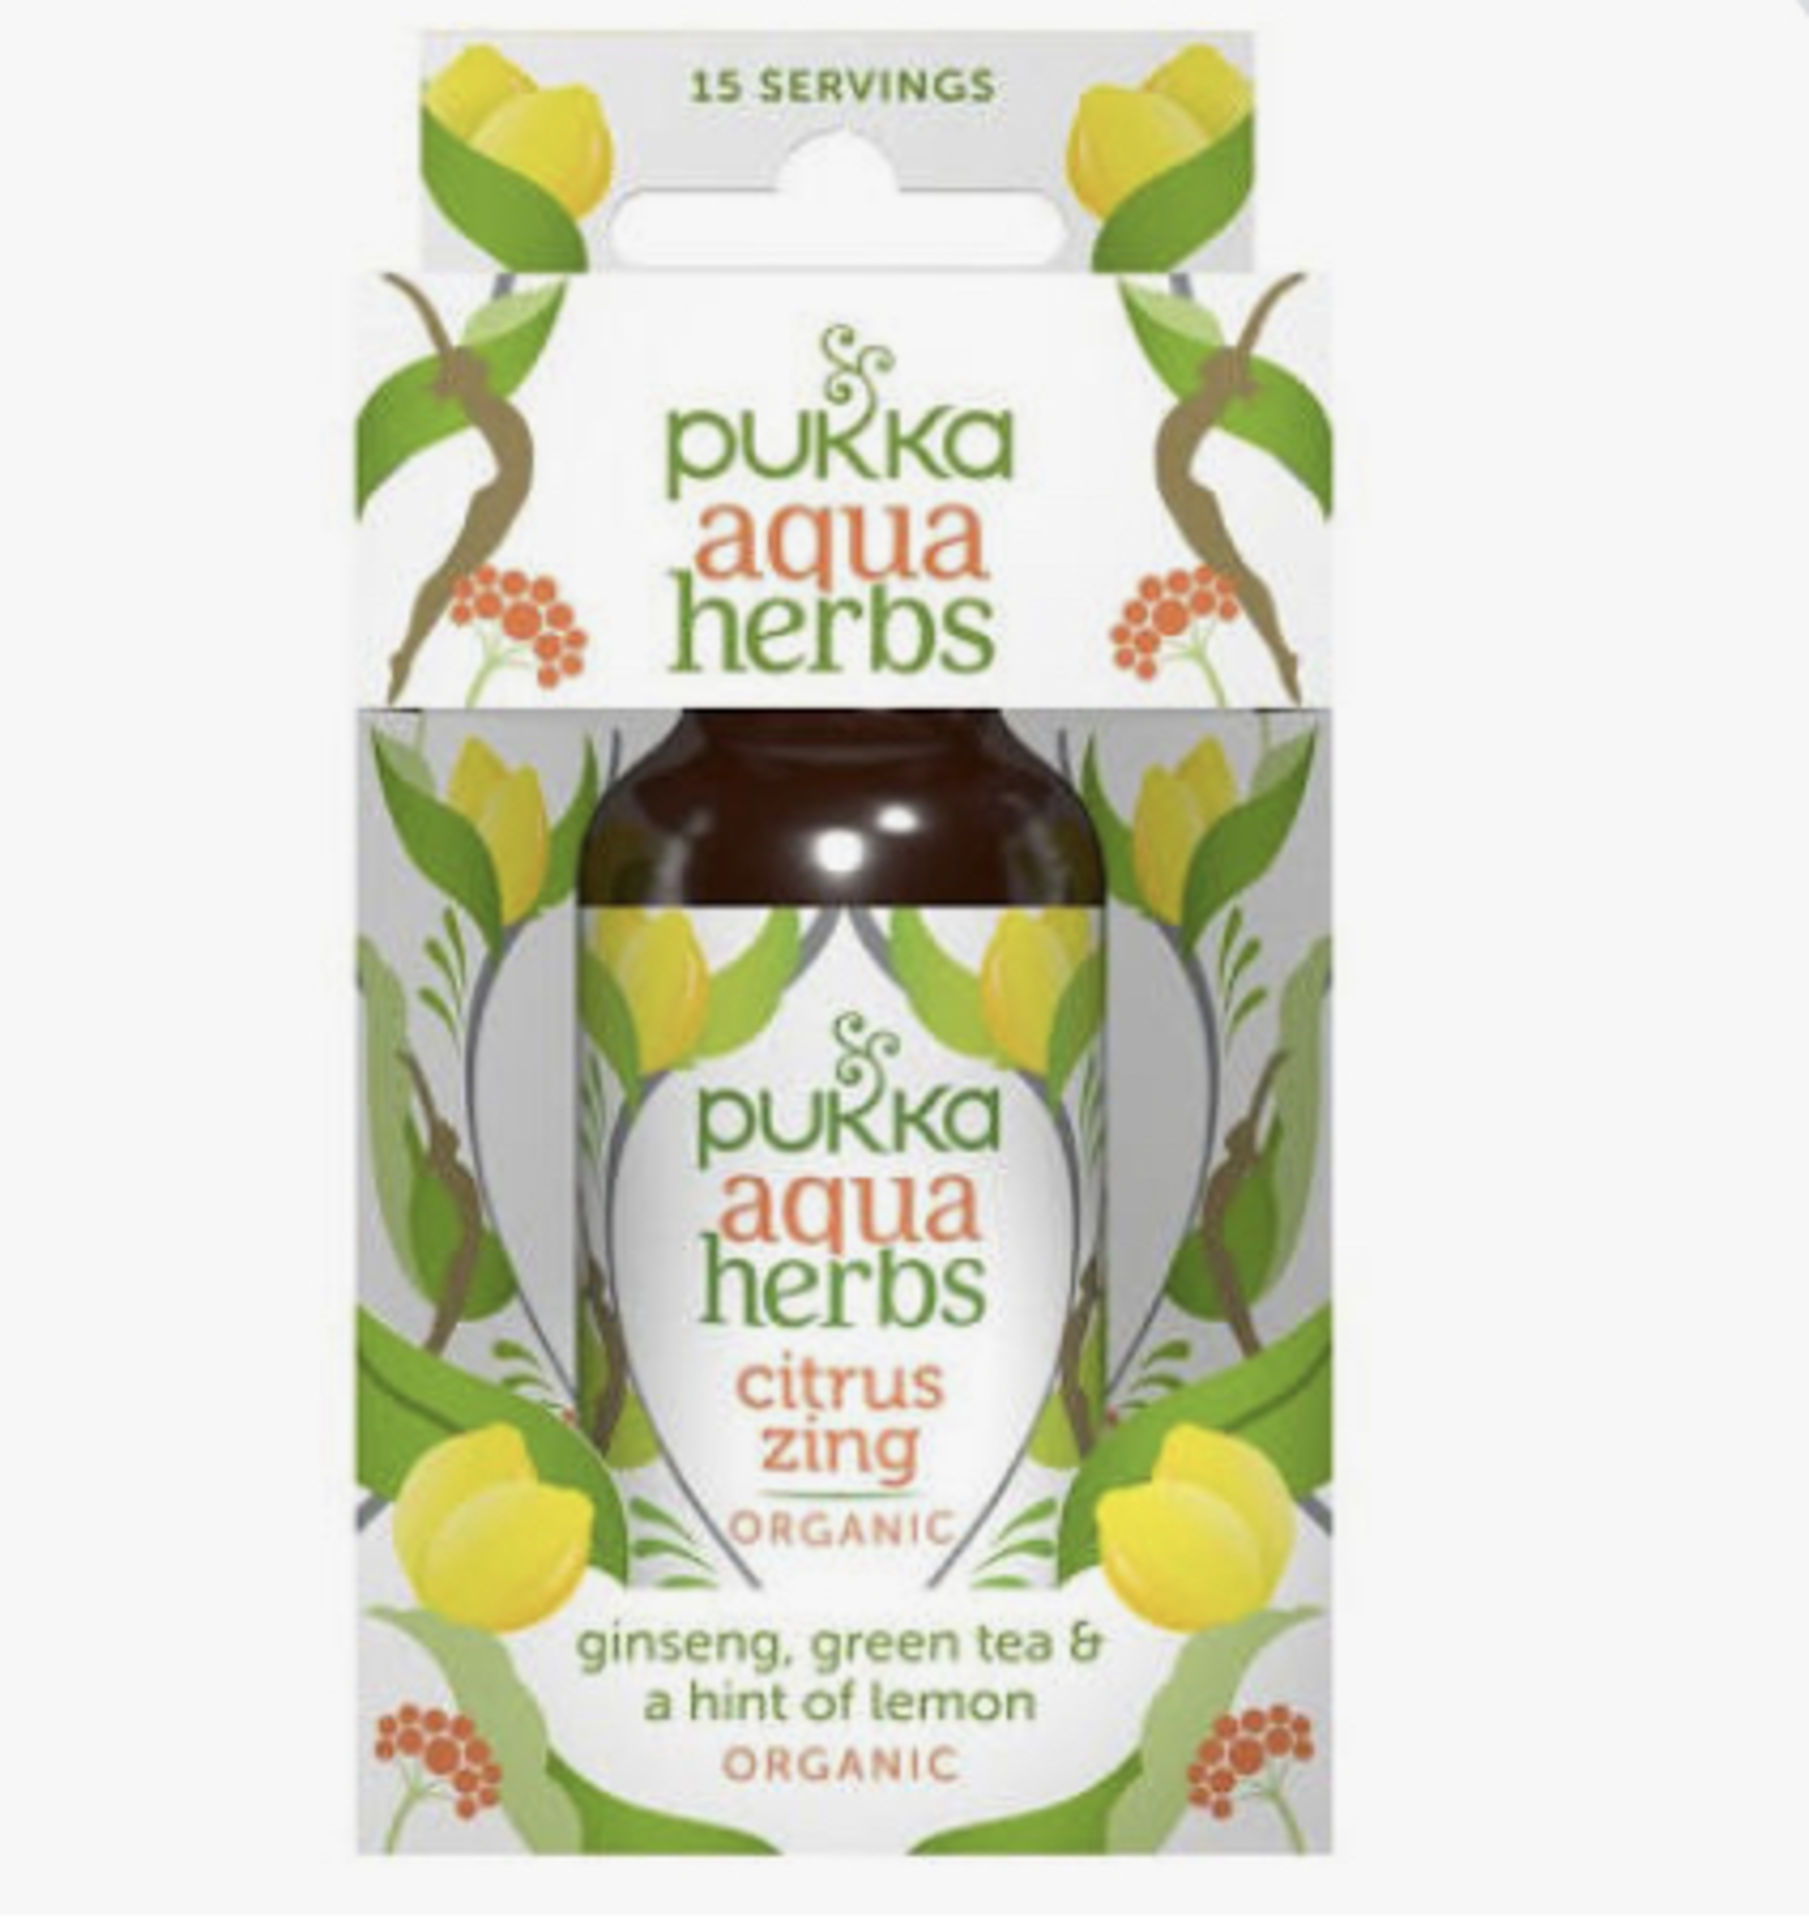 RRP £978 (Approx. Count 181) spSCJ21Skv8 ""Pukka Herbs Aqua Herbs, Citrus Zing, Organic Concentrated